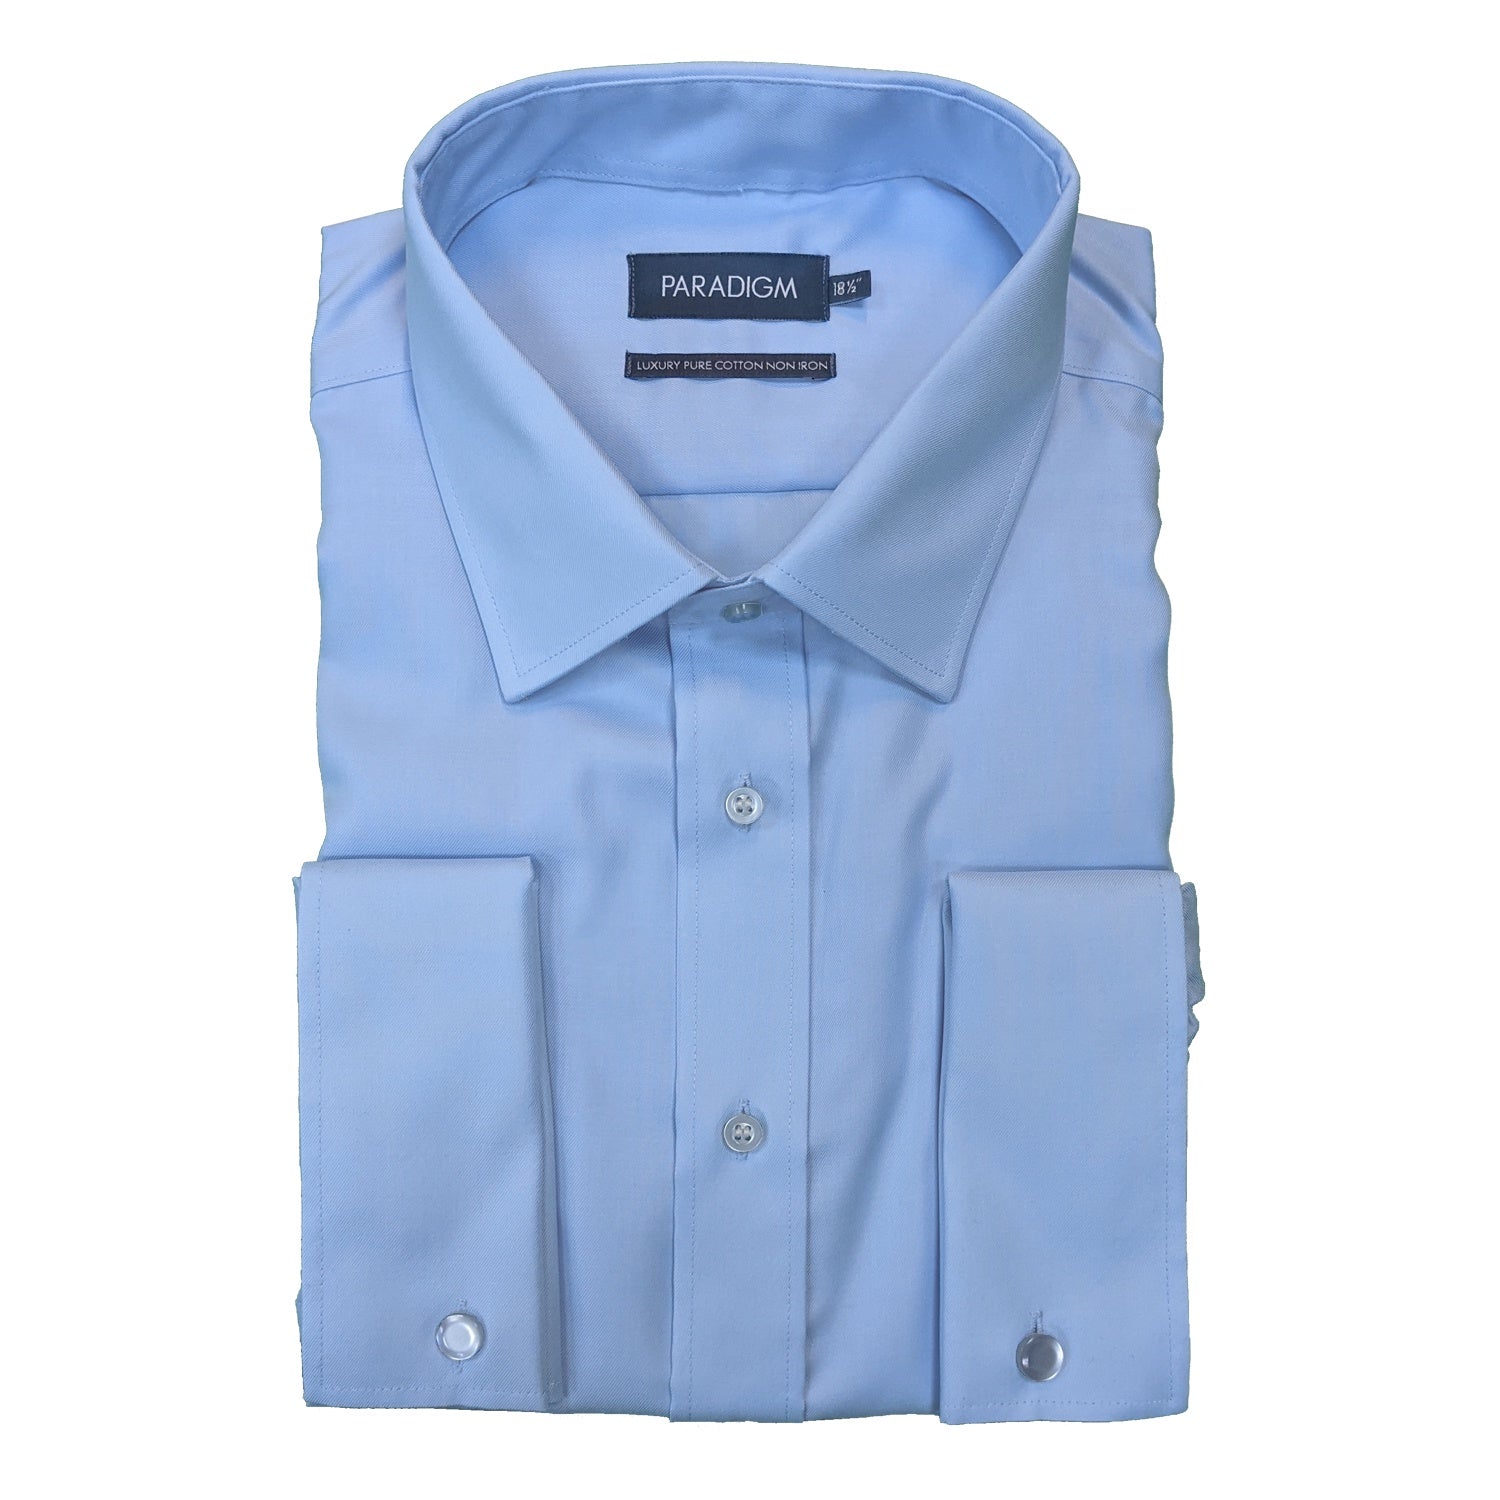 Paradigm Double Cuff Shirt - SLX8501 - Sky Blue 1